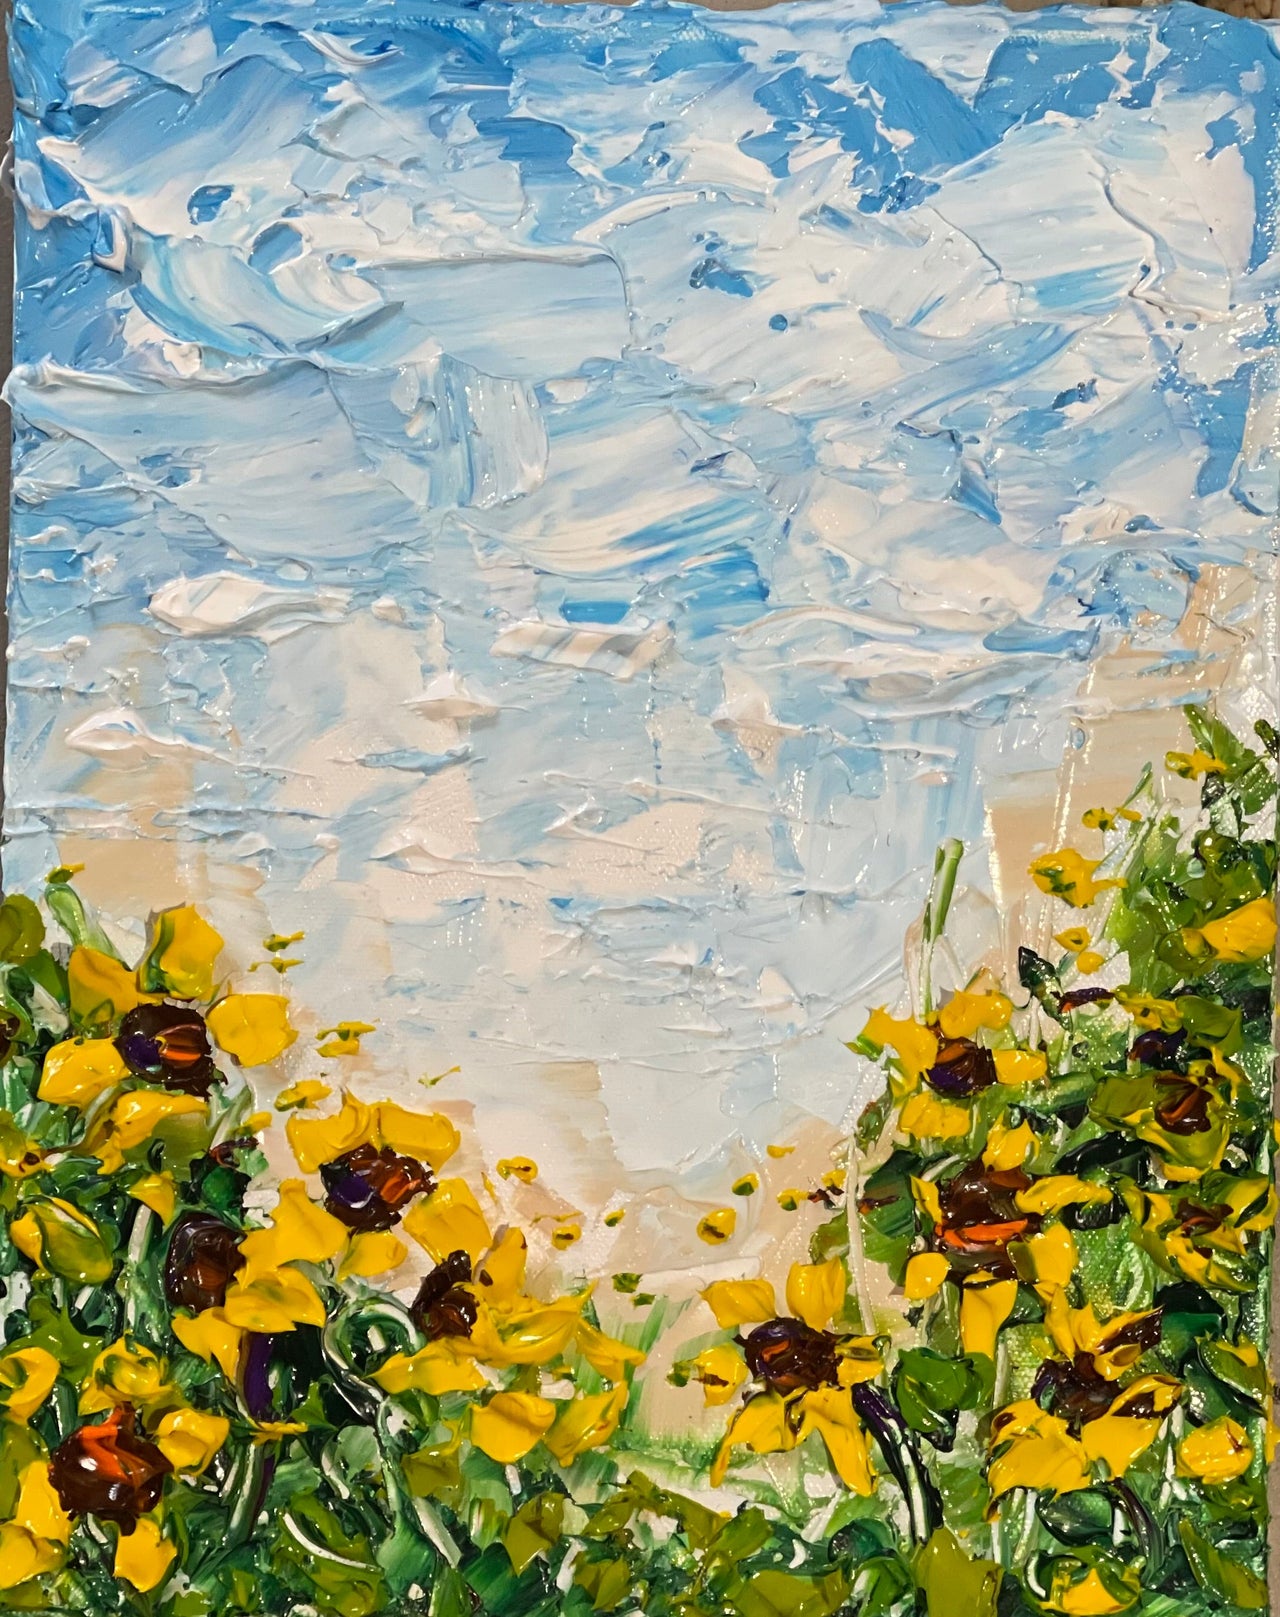 “Sunflowers for Peace"- Artwork